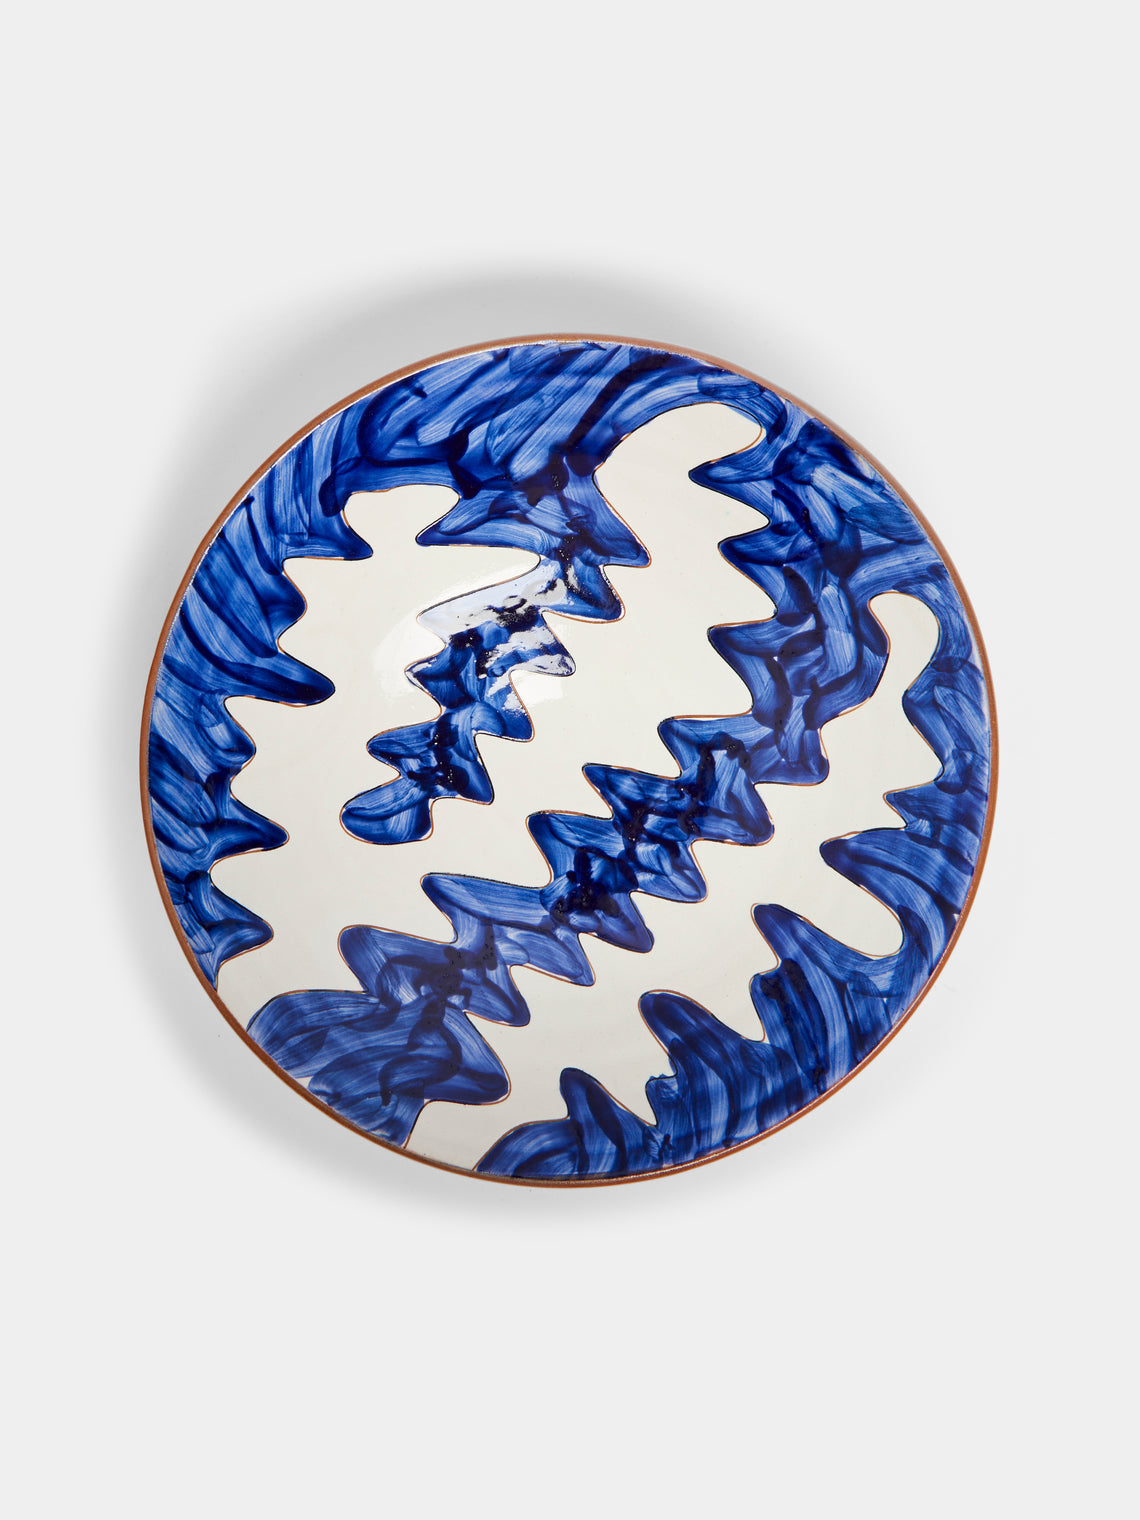 Malaika - Stencil Hand-Painted Ceramic Pasta Bowls (Set of 4) - Blue - ABASK